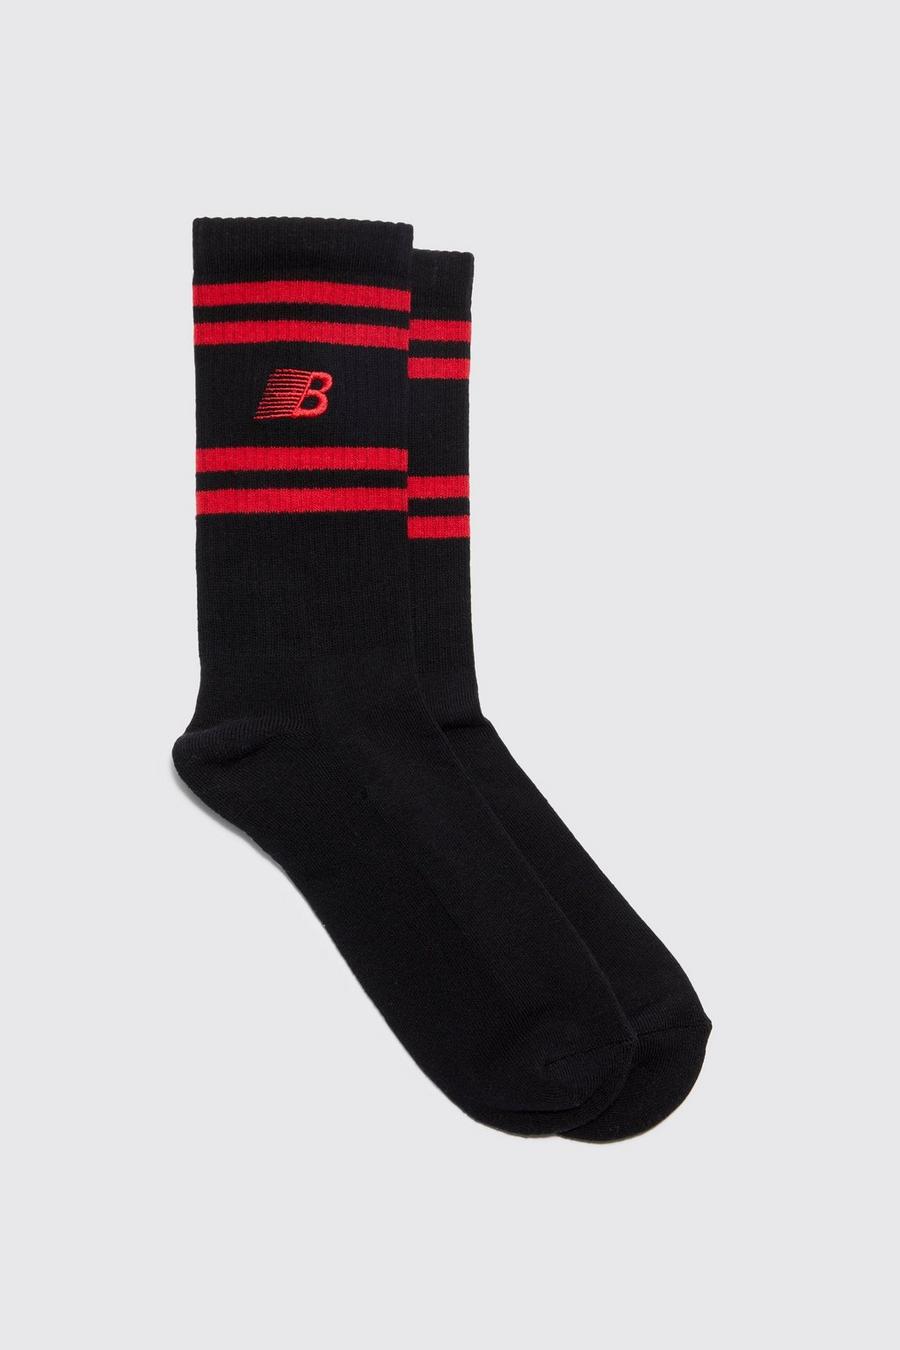 Black Embroidered B Stripe Socks